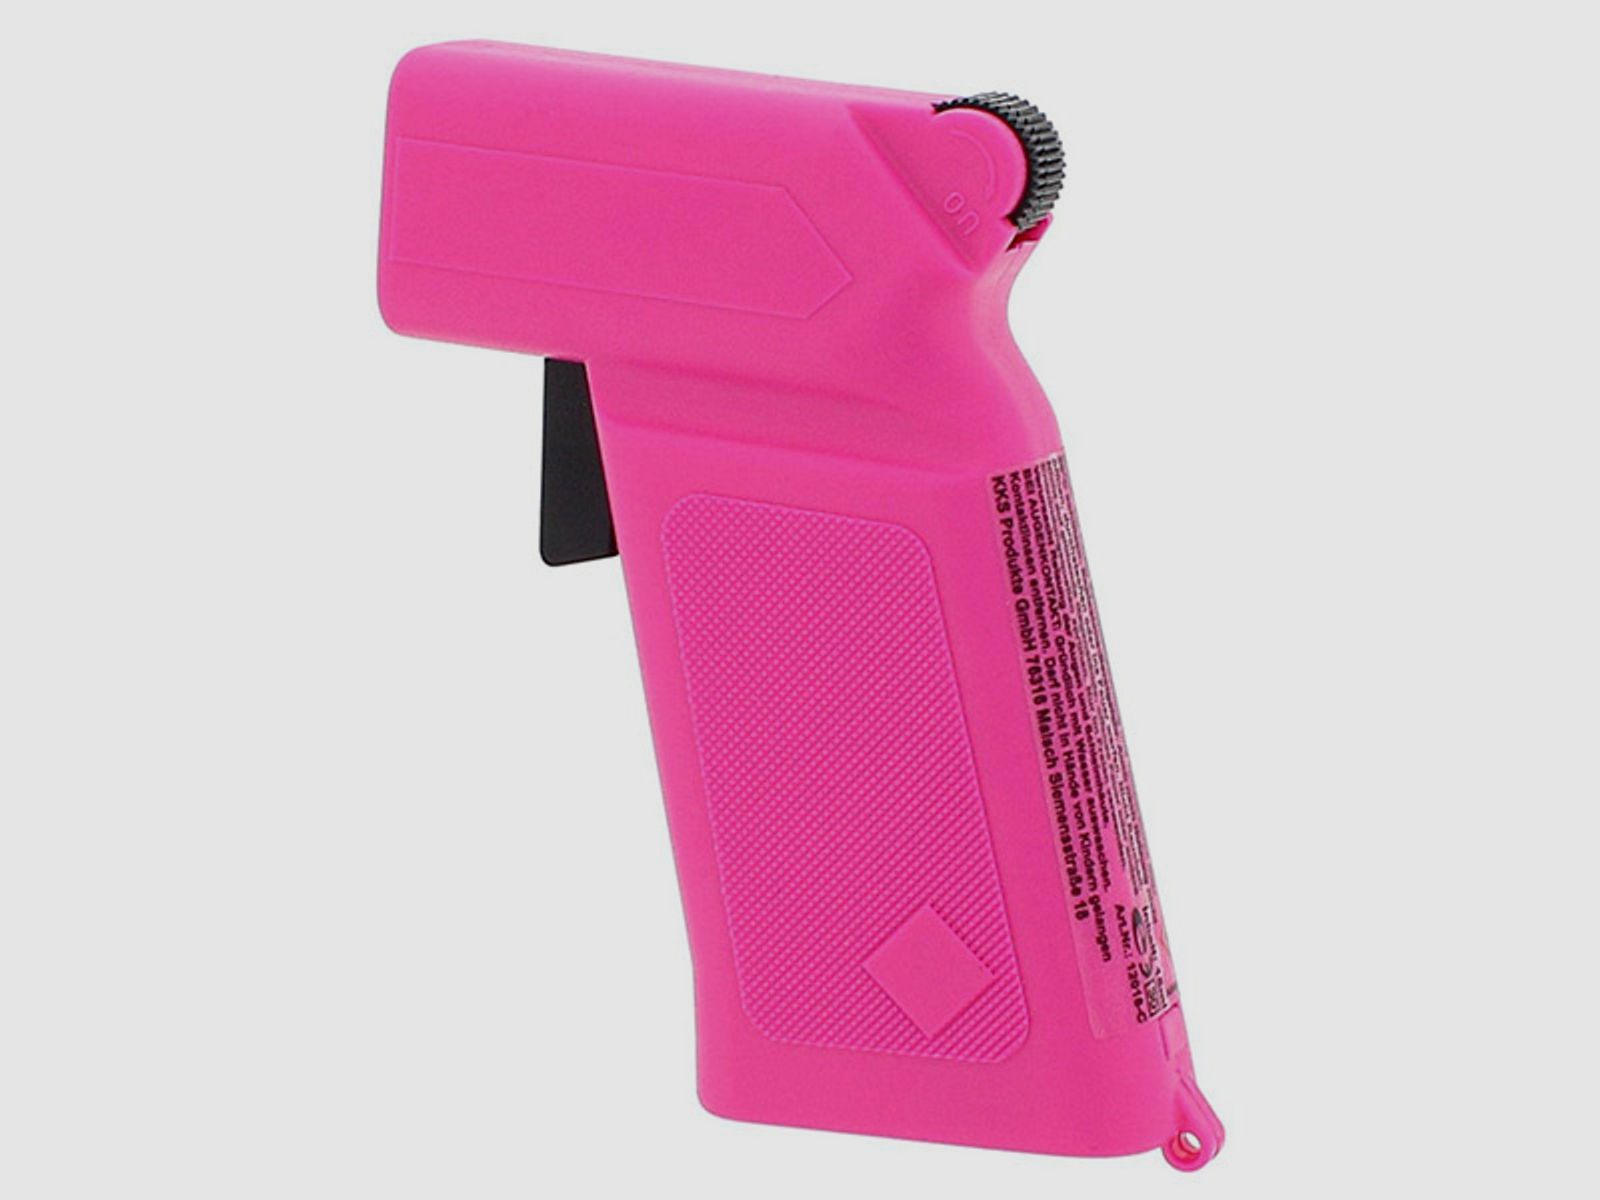 Pfefferspraypistole KKS PSP PepperSpray Pistol pink 18 ml (P18)